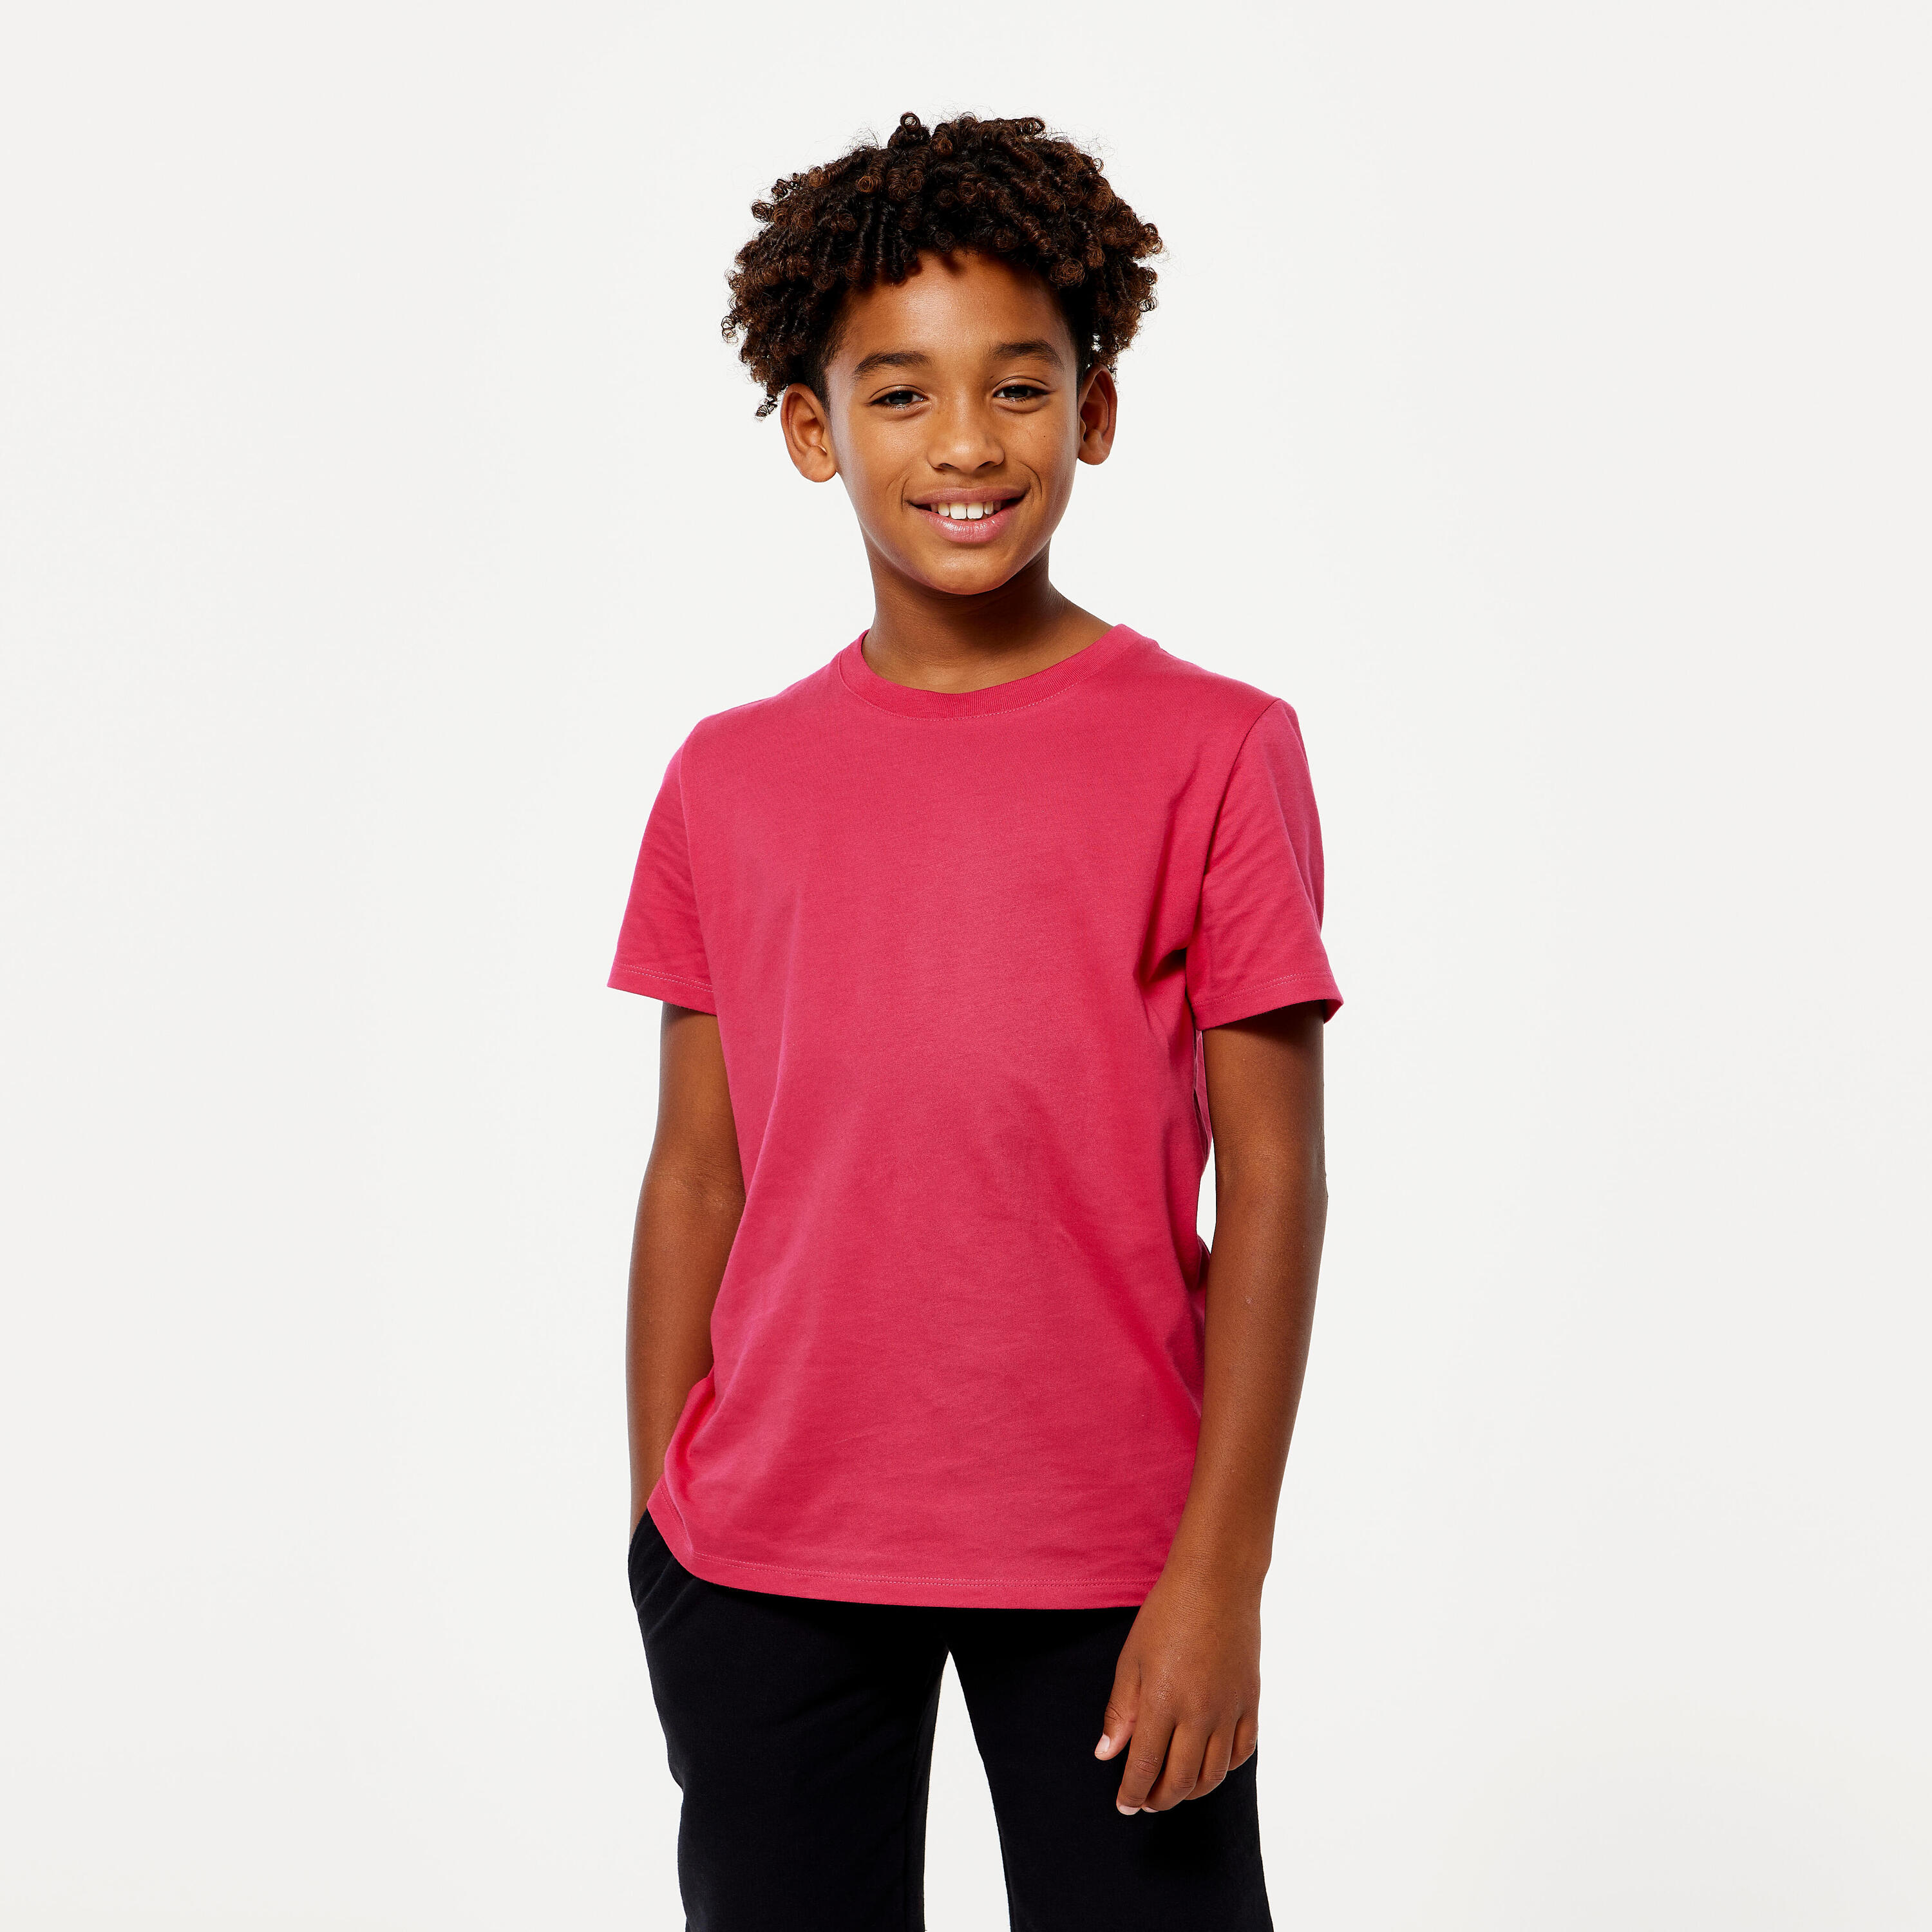 Kids' Unisex Cotton T-Shirt - Fuchsia Pink 5/6